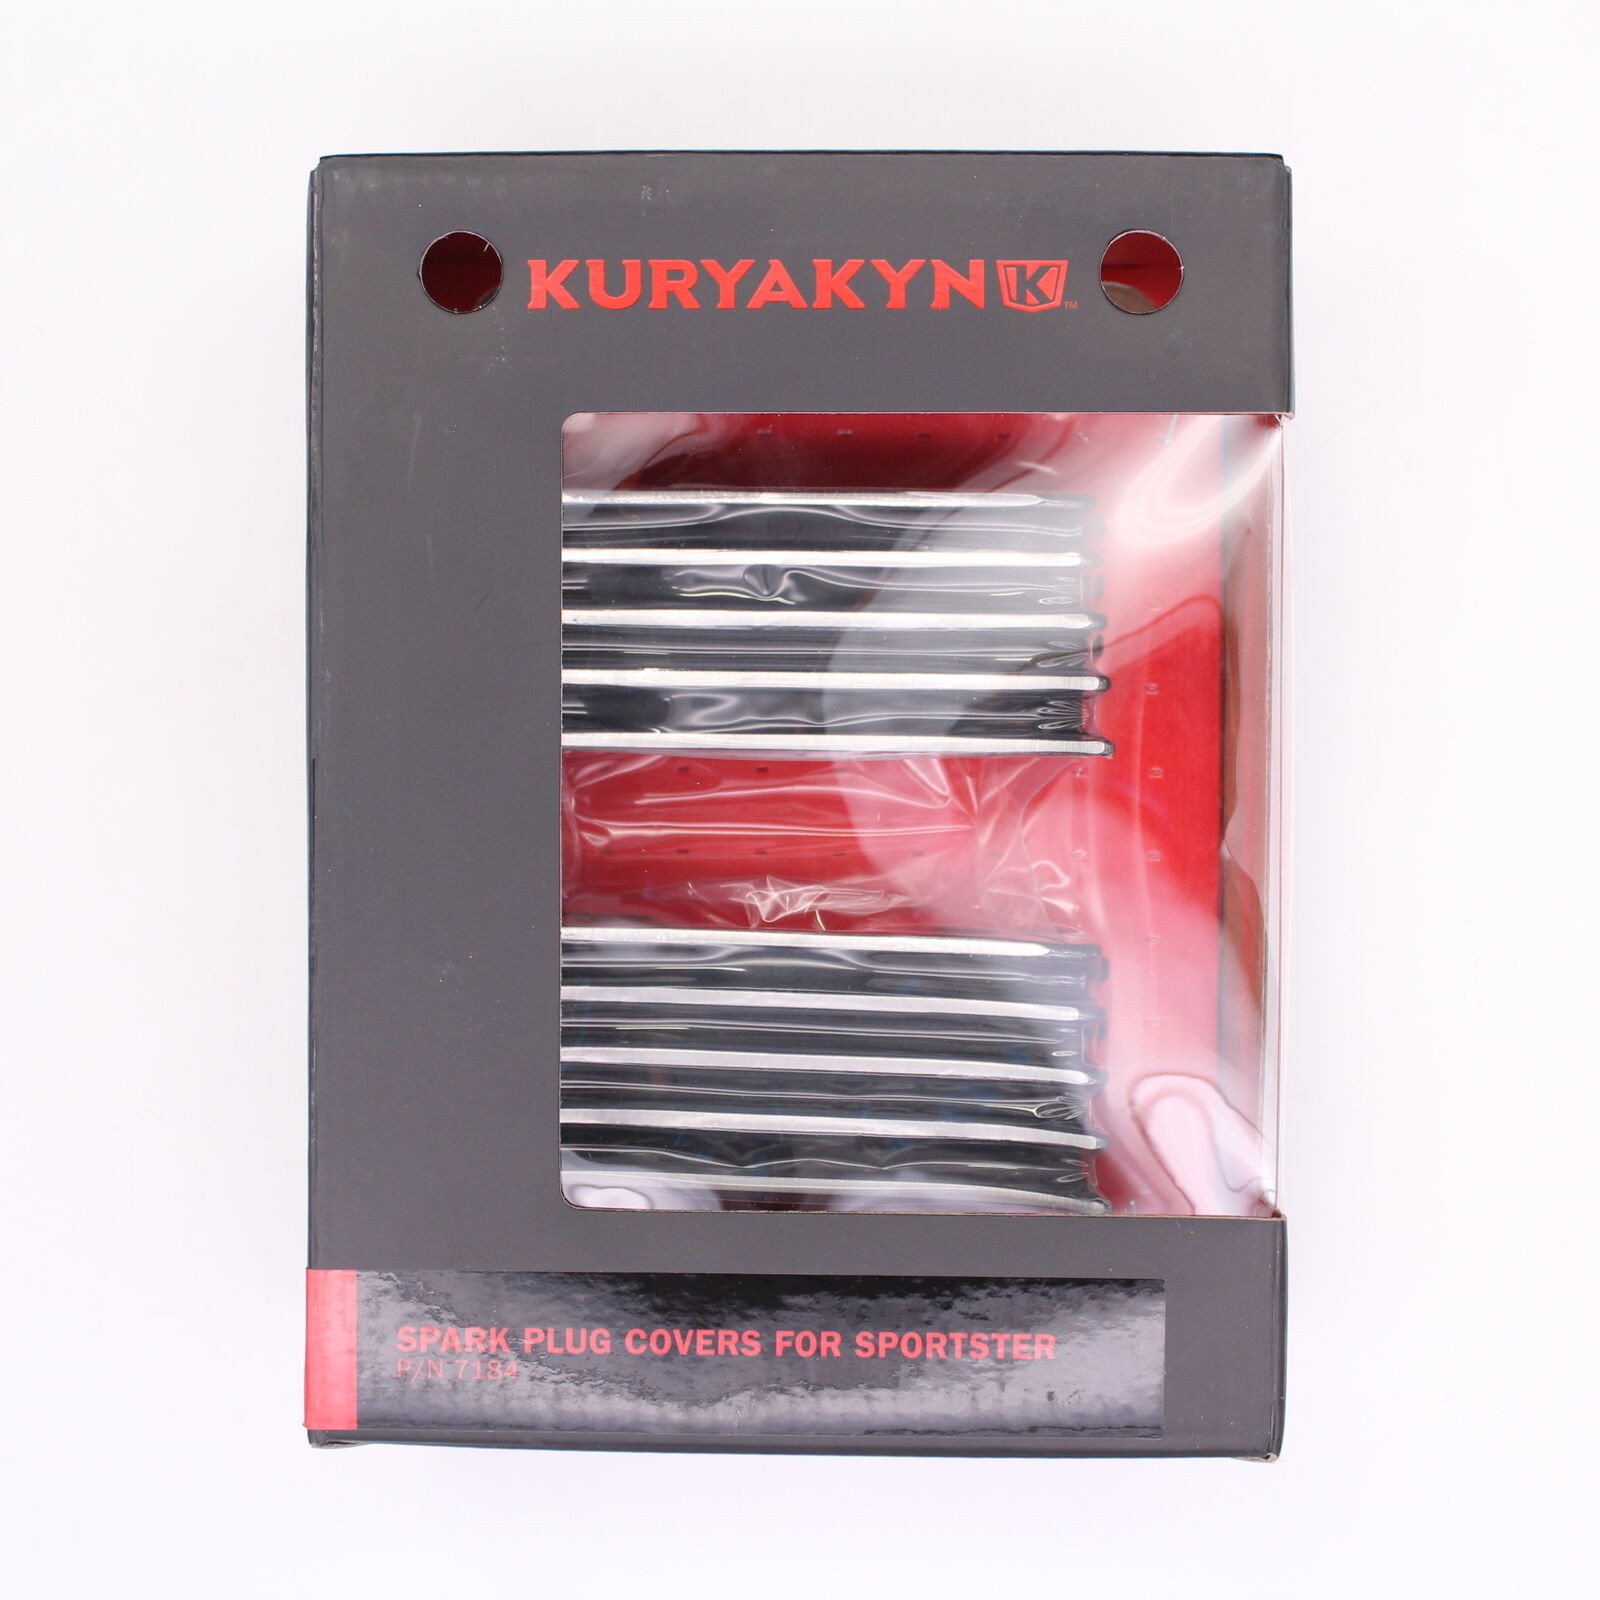 Kuryakyn Spark Plug Cover Part Number - 7184